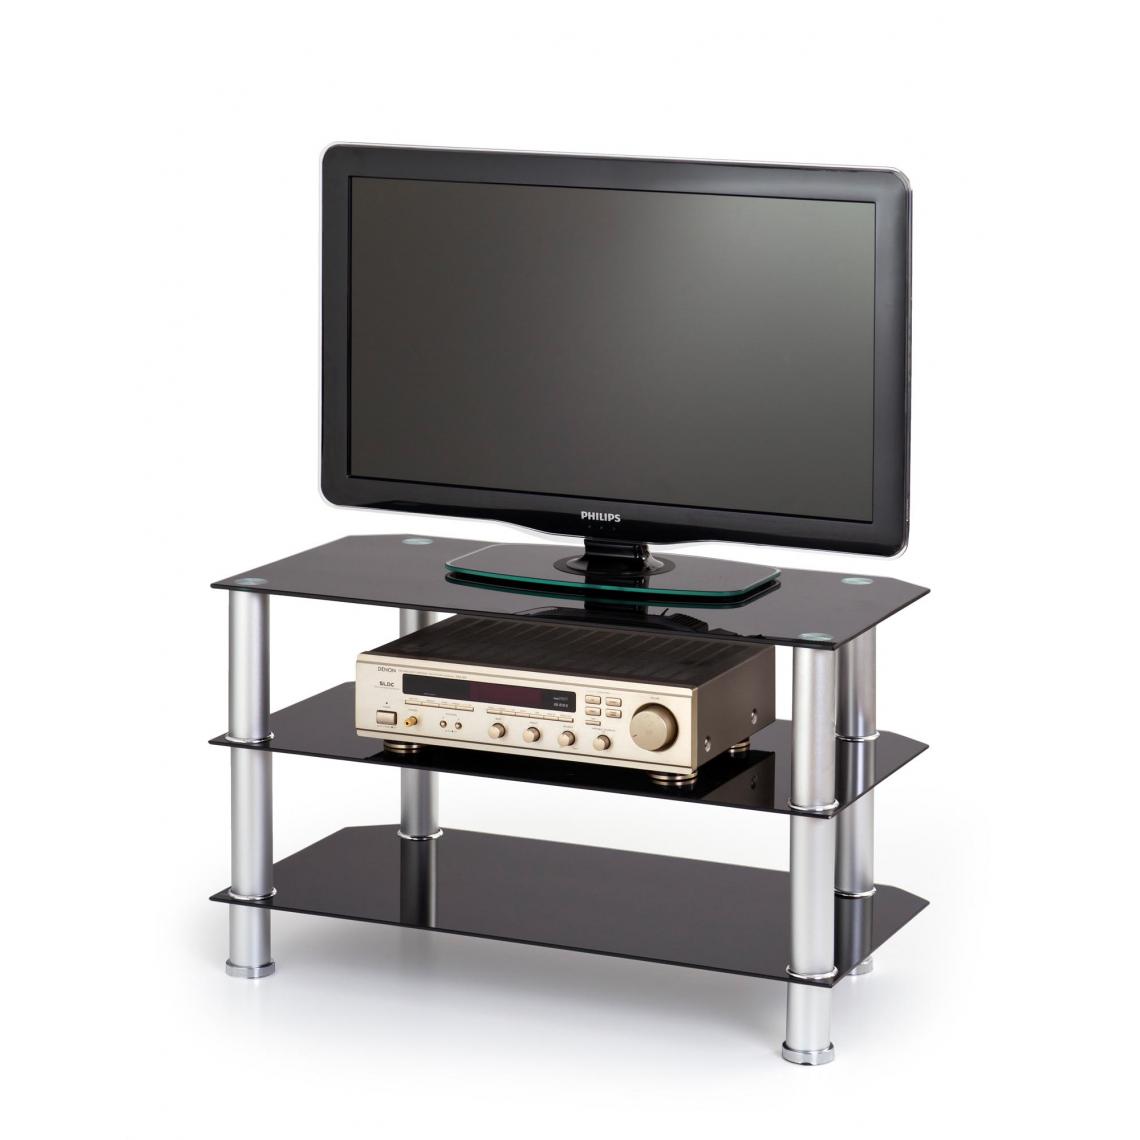 Hucoco - HEIDI - Meuble TV style moderne salon/chambre d'ado - 80x50x40 - Tablettes en verre - Meuble multimédia - Noir - Meubles TV, Hi-Fi